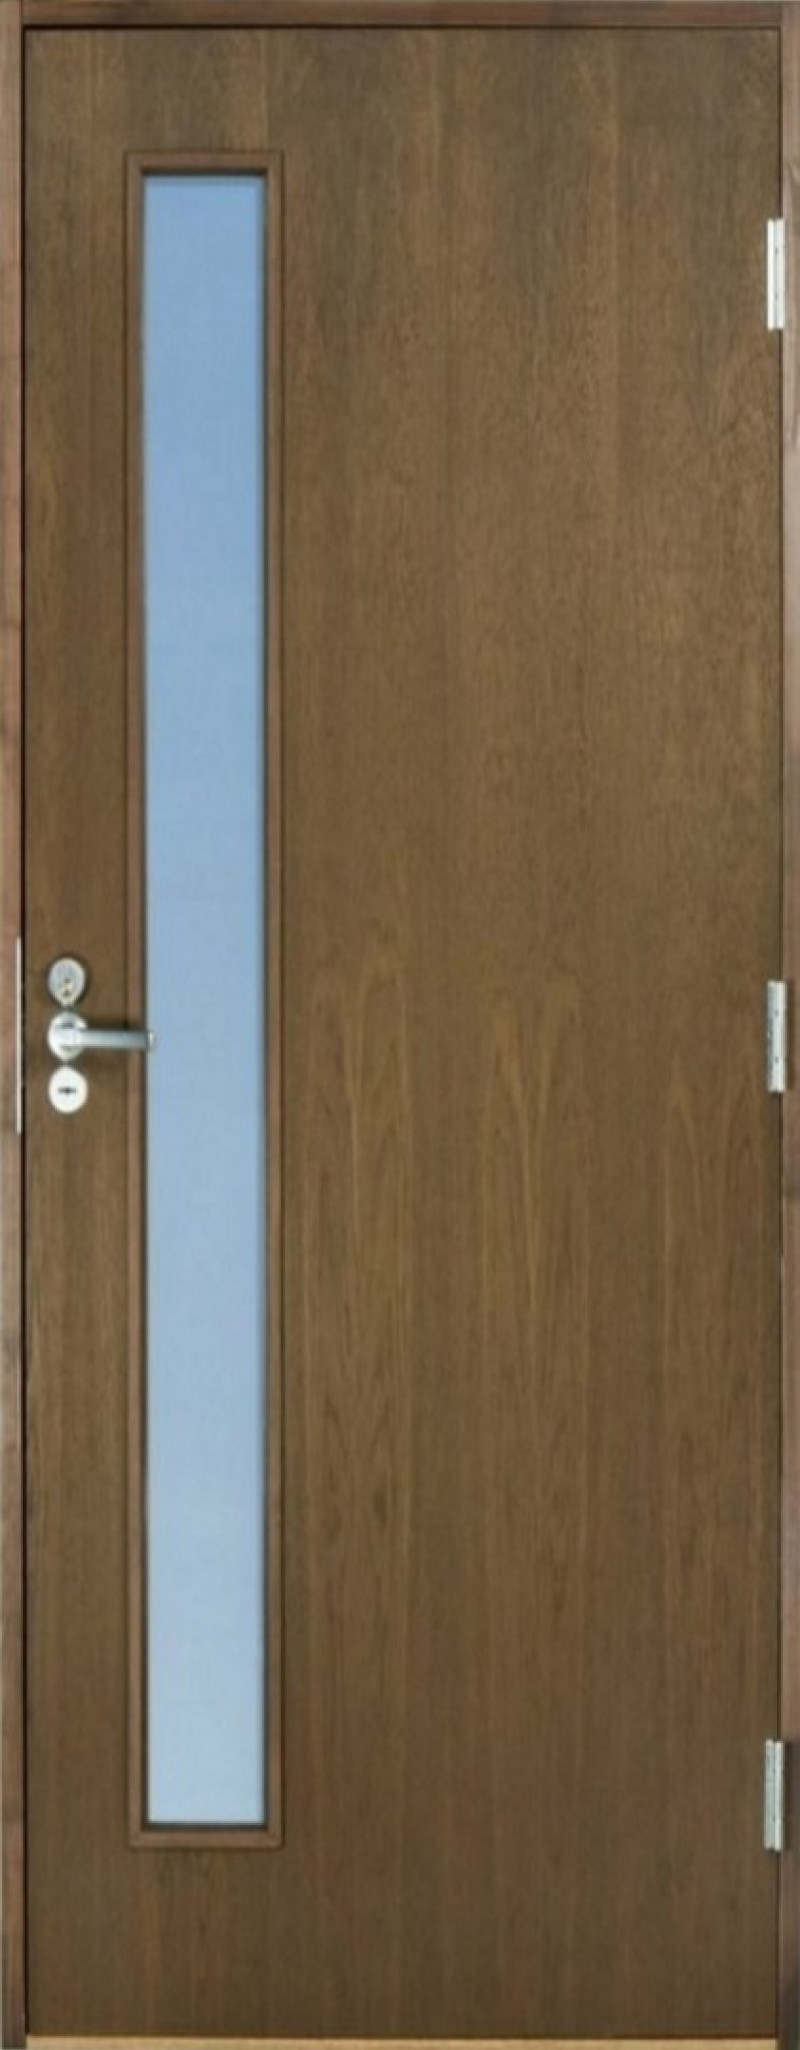 Fireproof and soundproof wooden doors